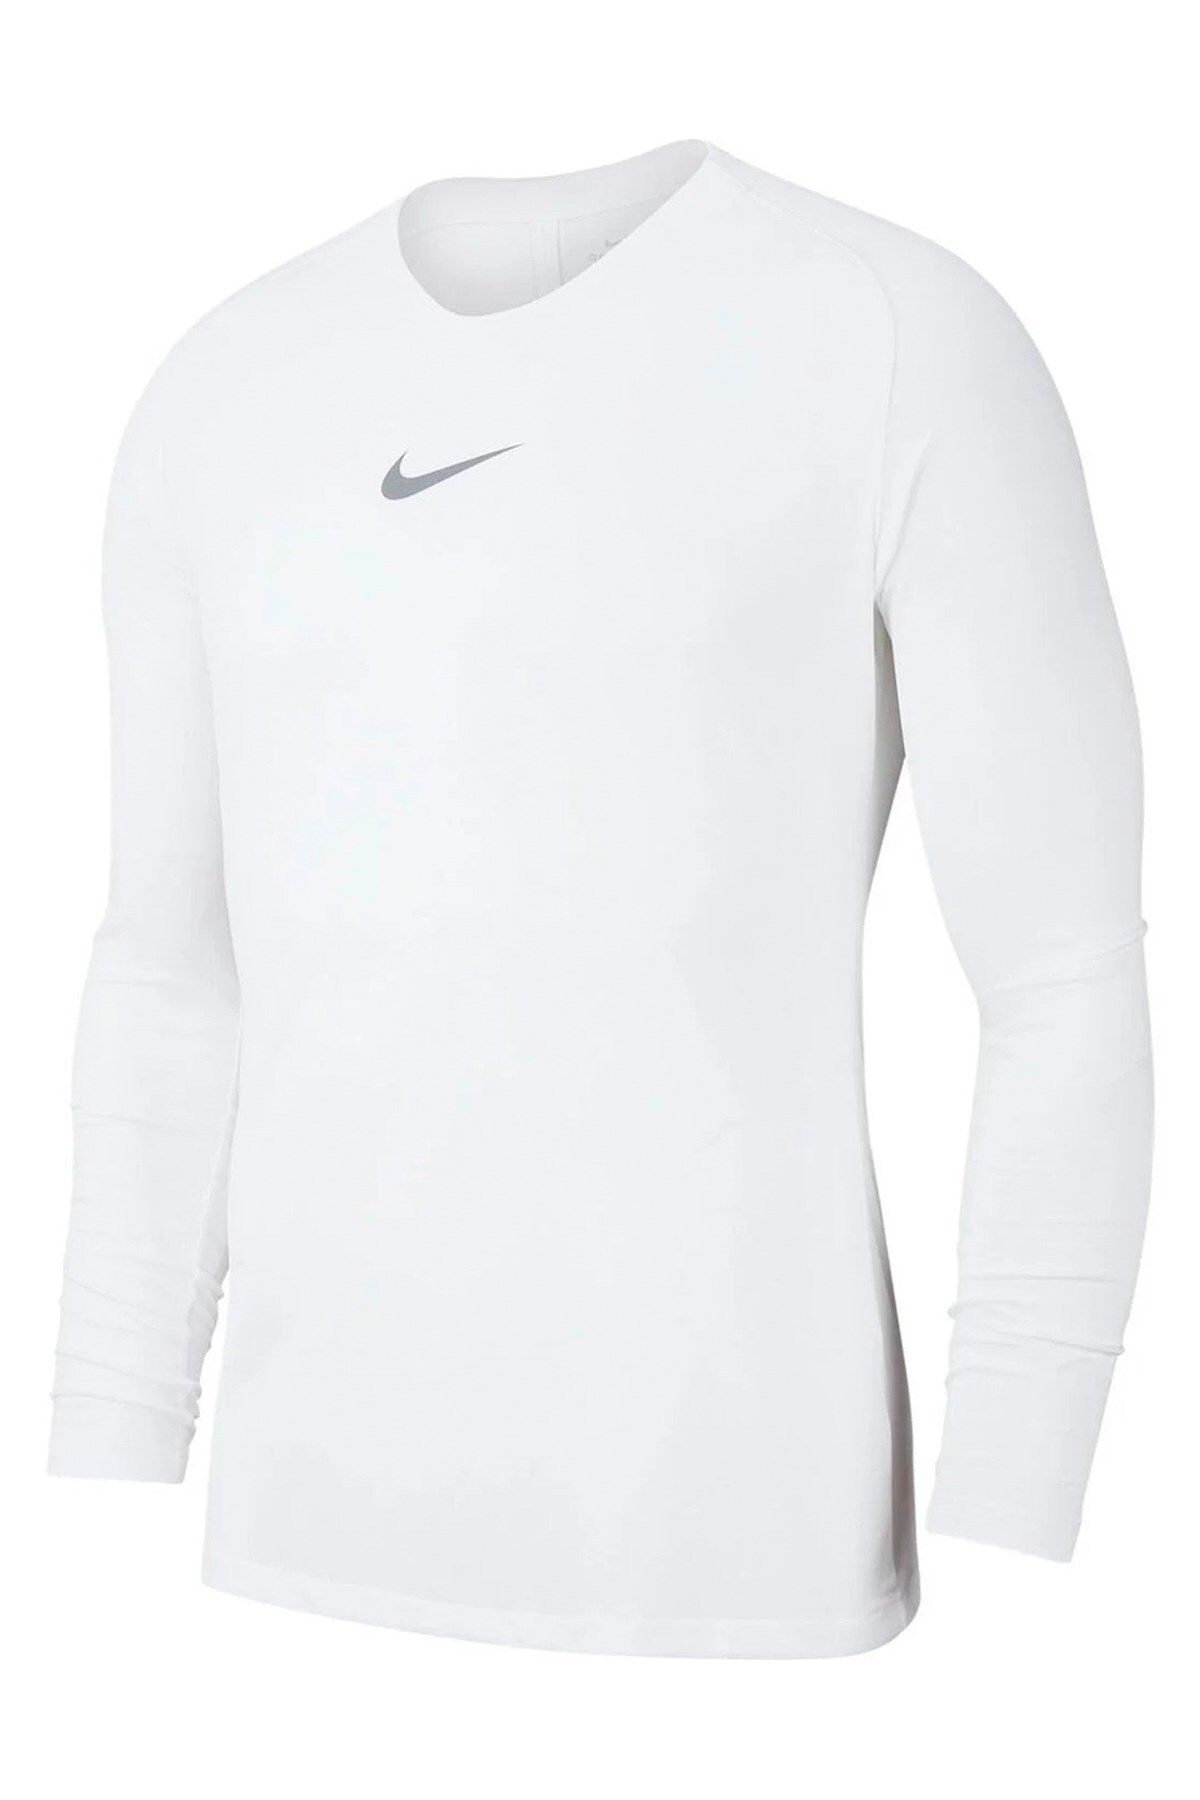 Nike M NK DRY PARK 1STLYR JSY LS Erkek Sweatshirt AV2609-100